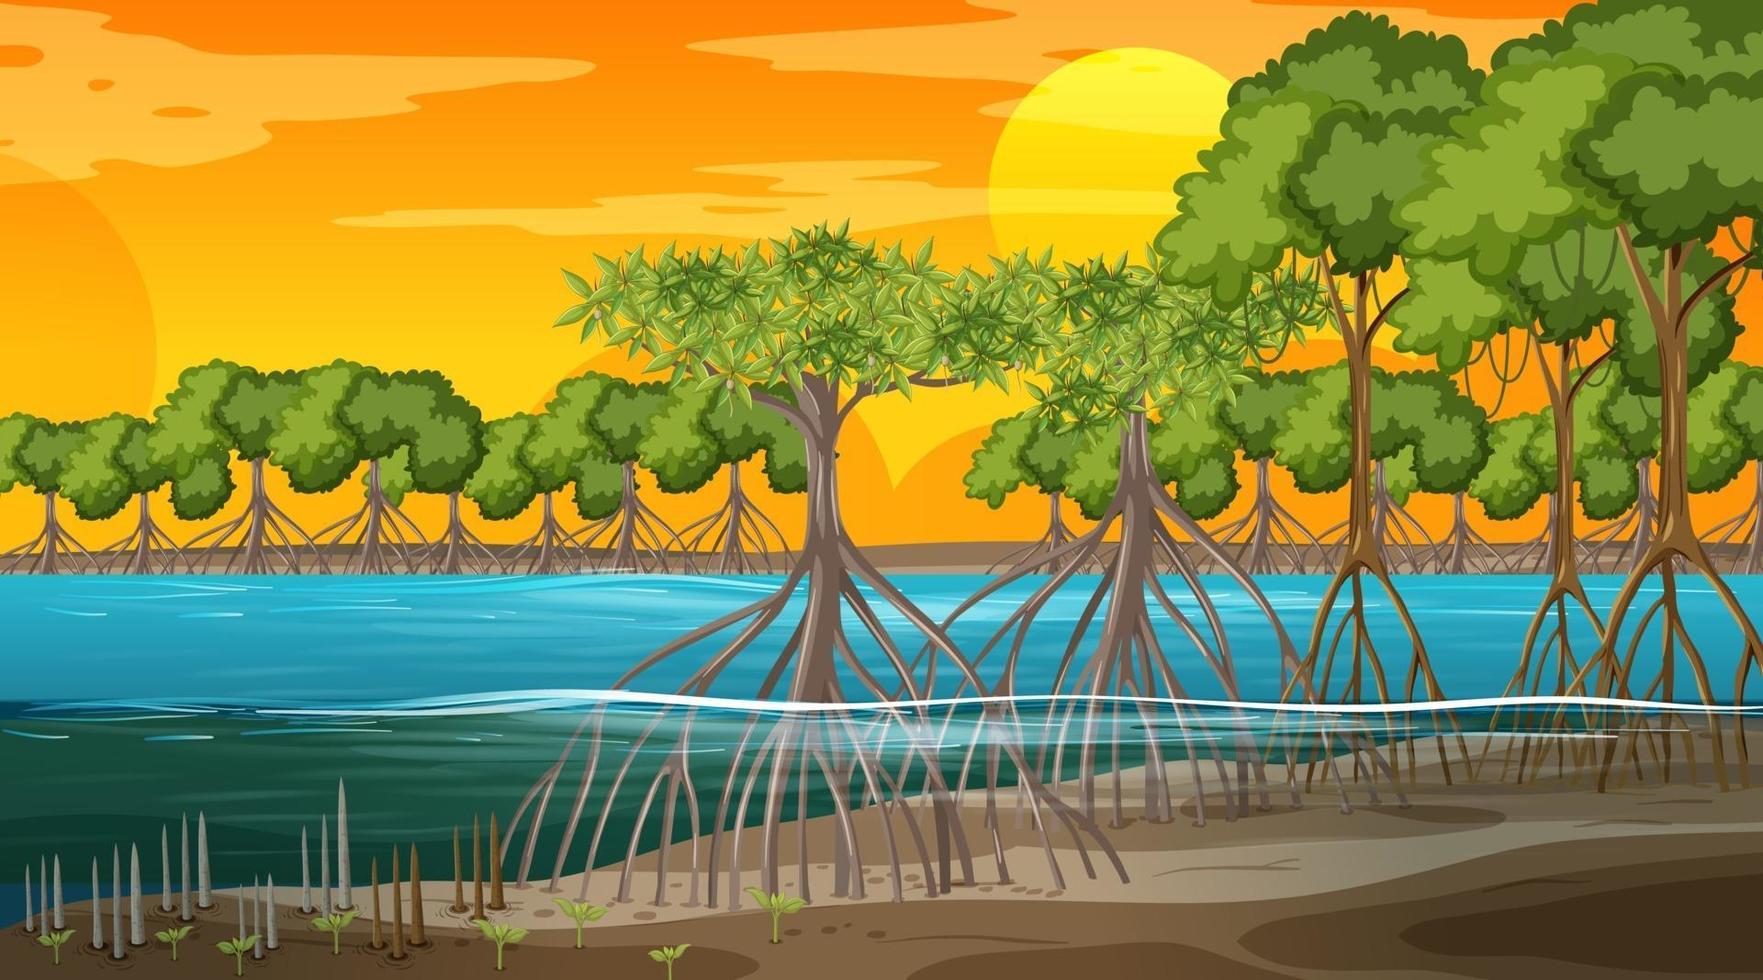 Mangrove forest landscape scene at sunset time vector